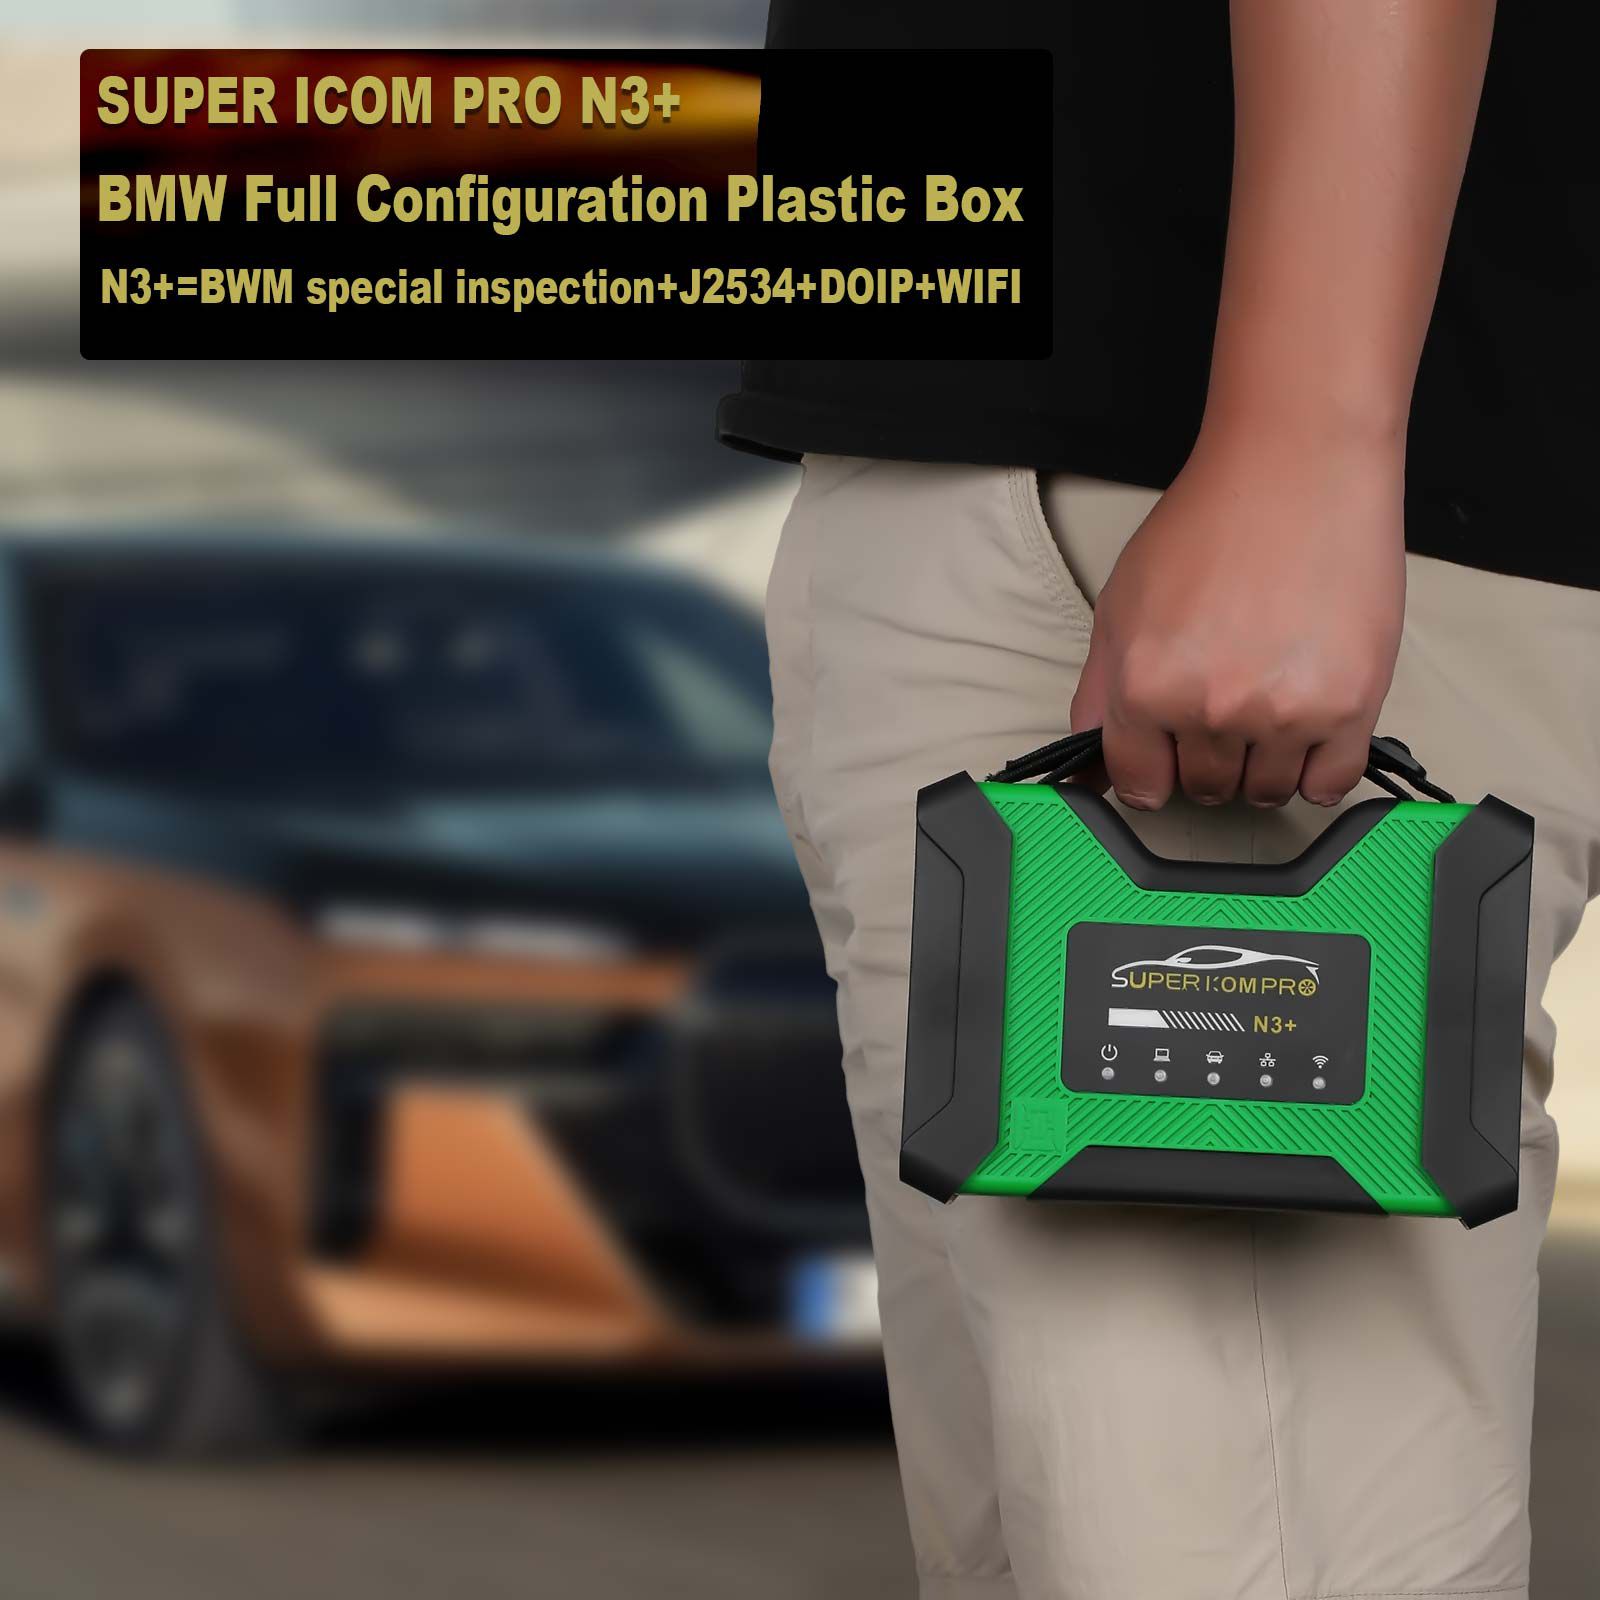 SUPER ICOM PRO N3+ BMW Basic Configuration + OBD Cable + USB Cable + Carton Box